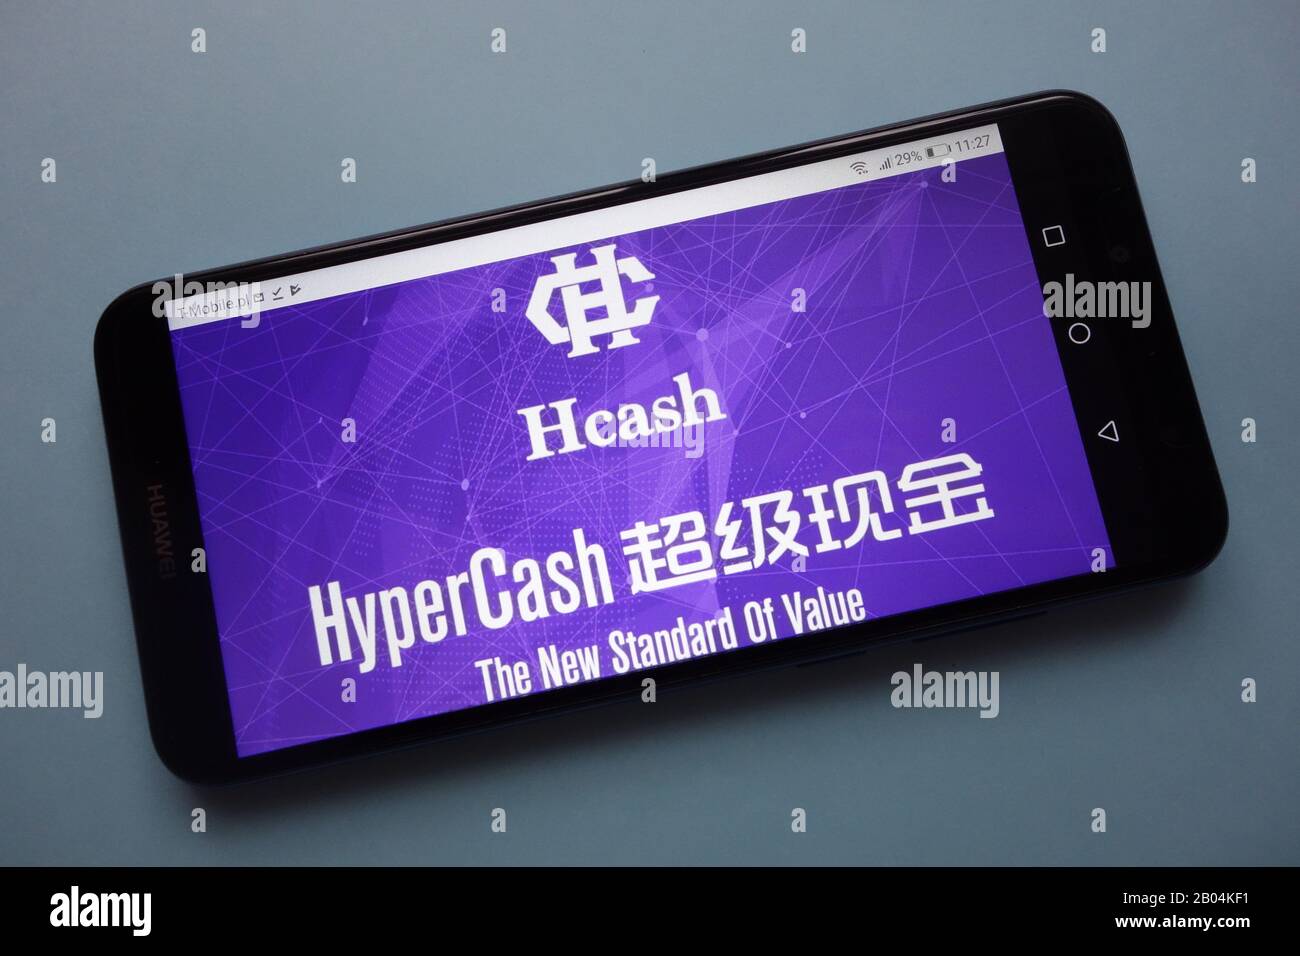 Hcash (HSR) cryptocurrency logo displayed on smartphone Stock Photo